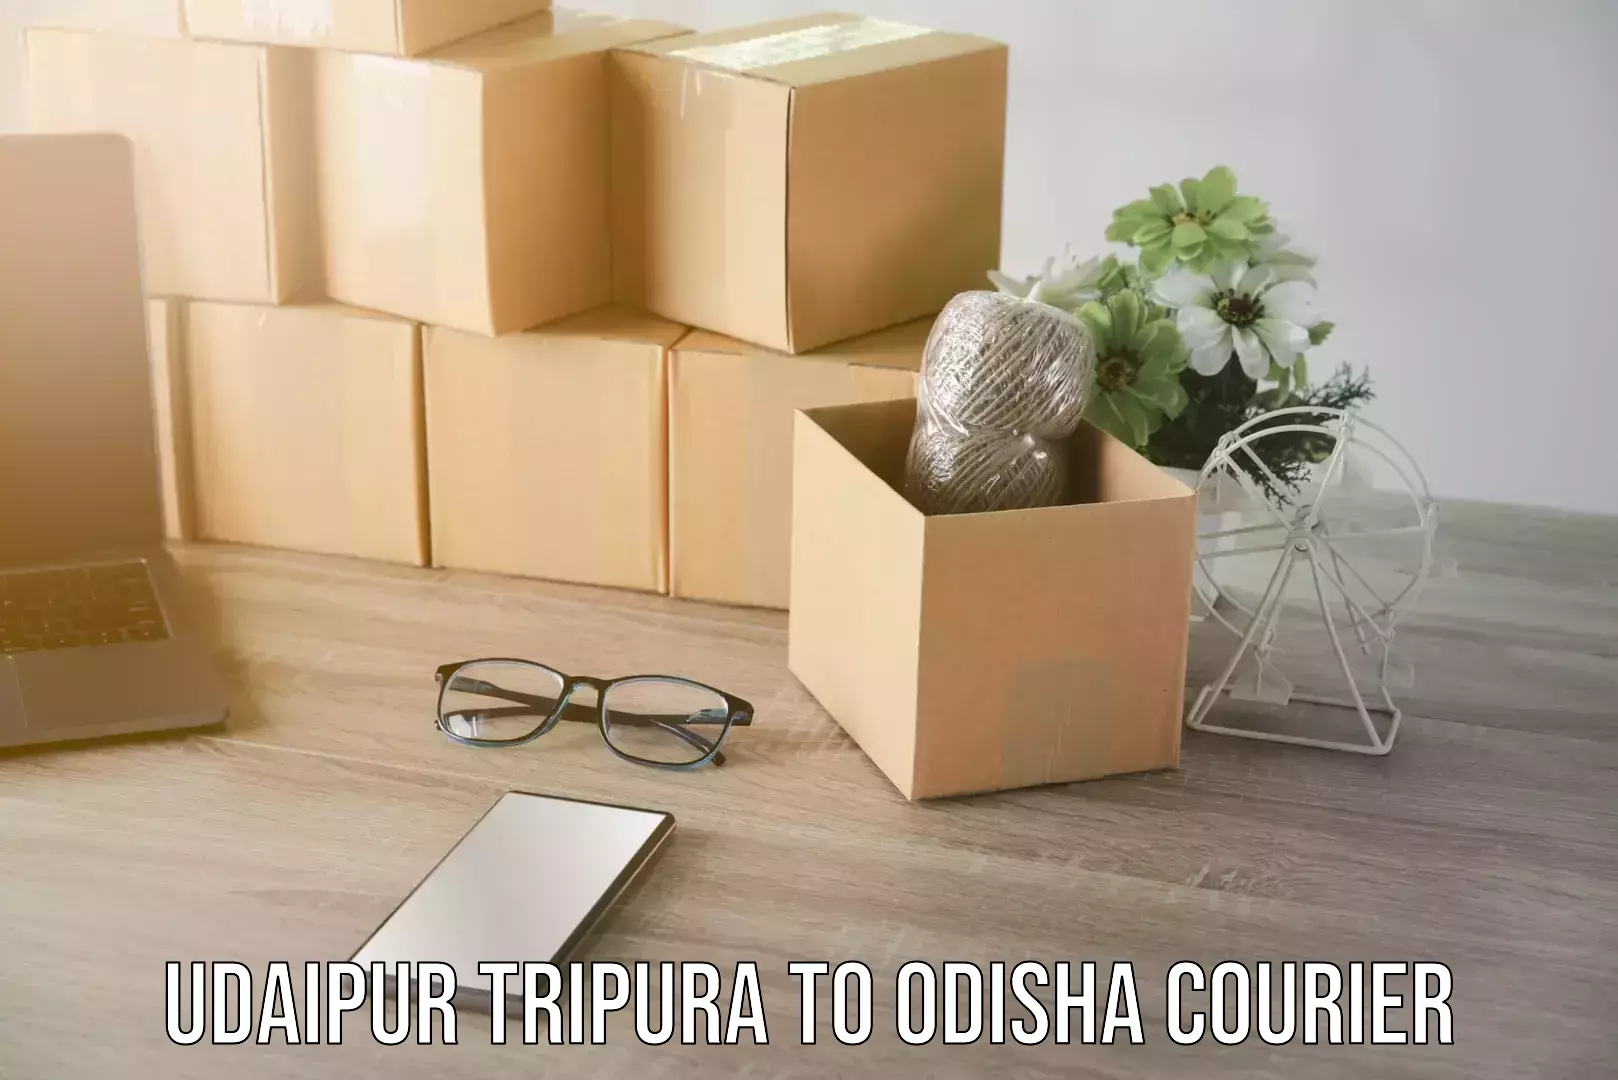 Speedy delivery service Udaipur Tripura to Odisha